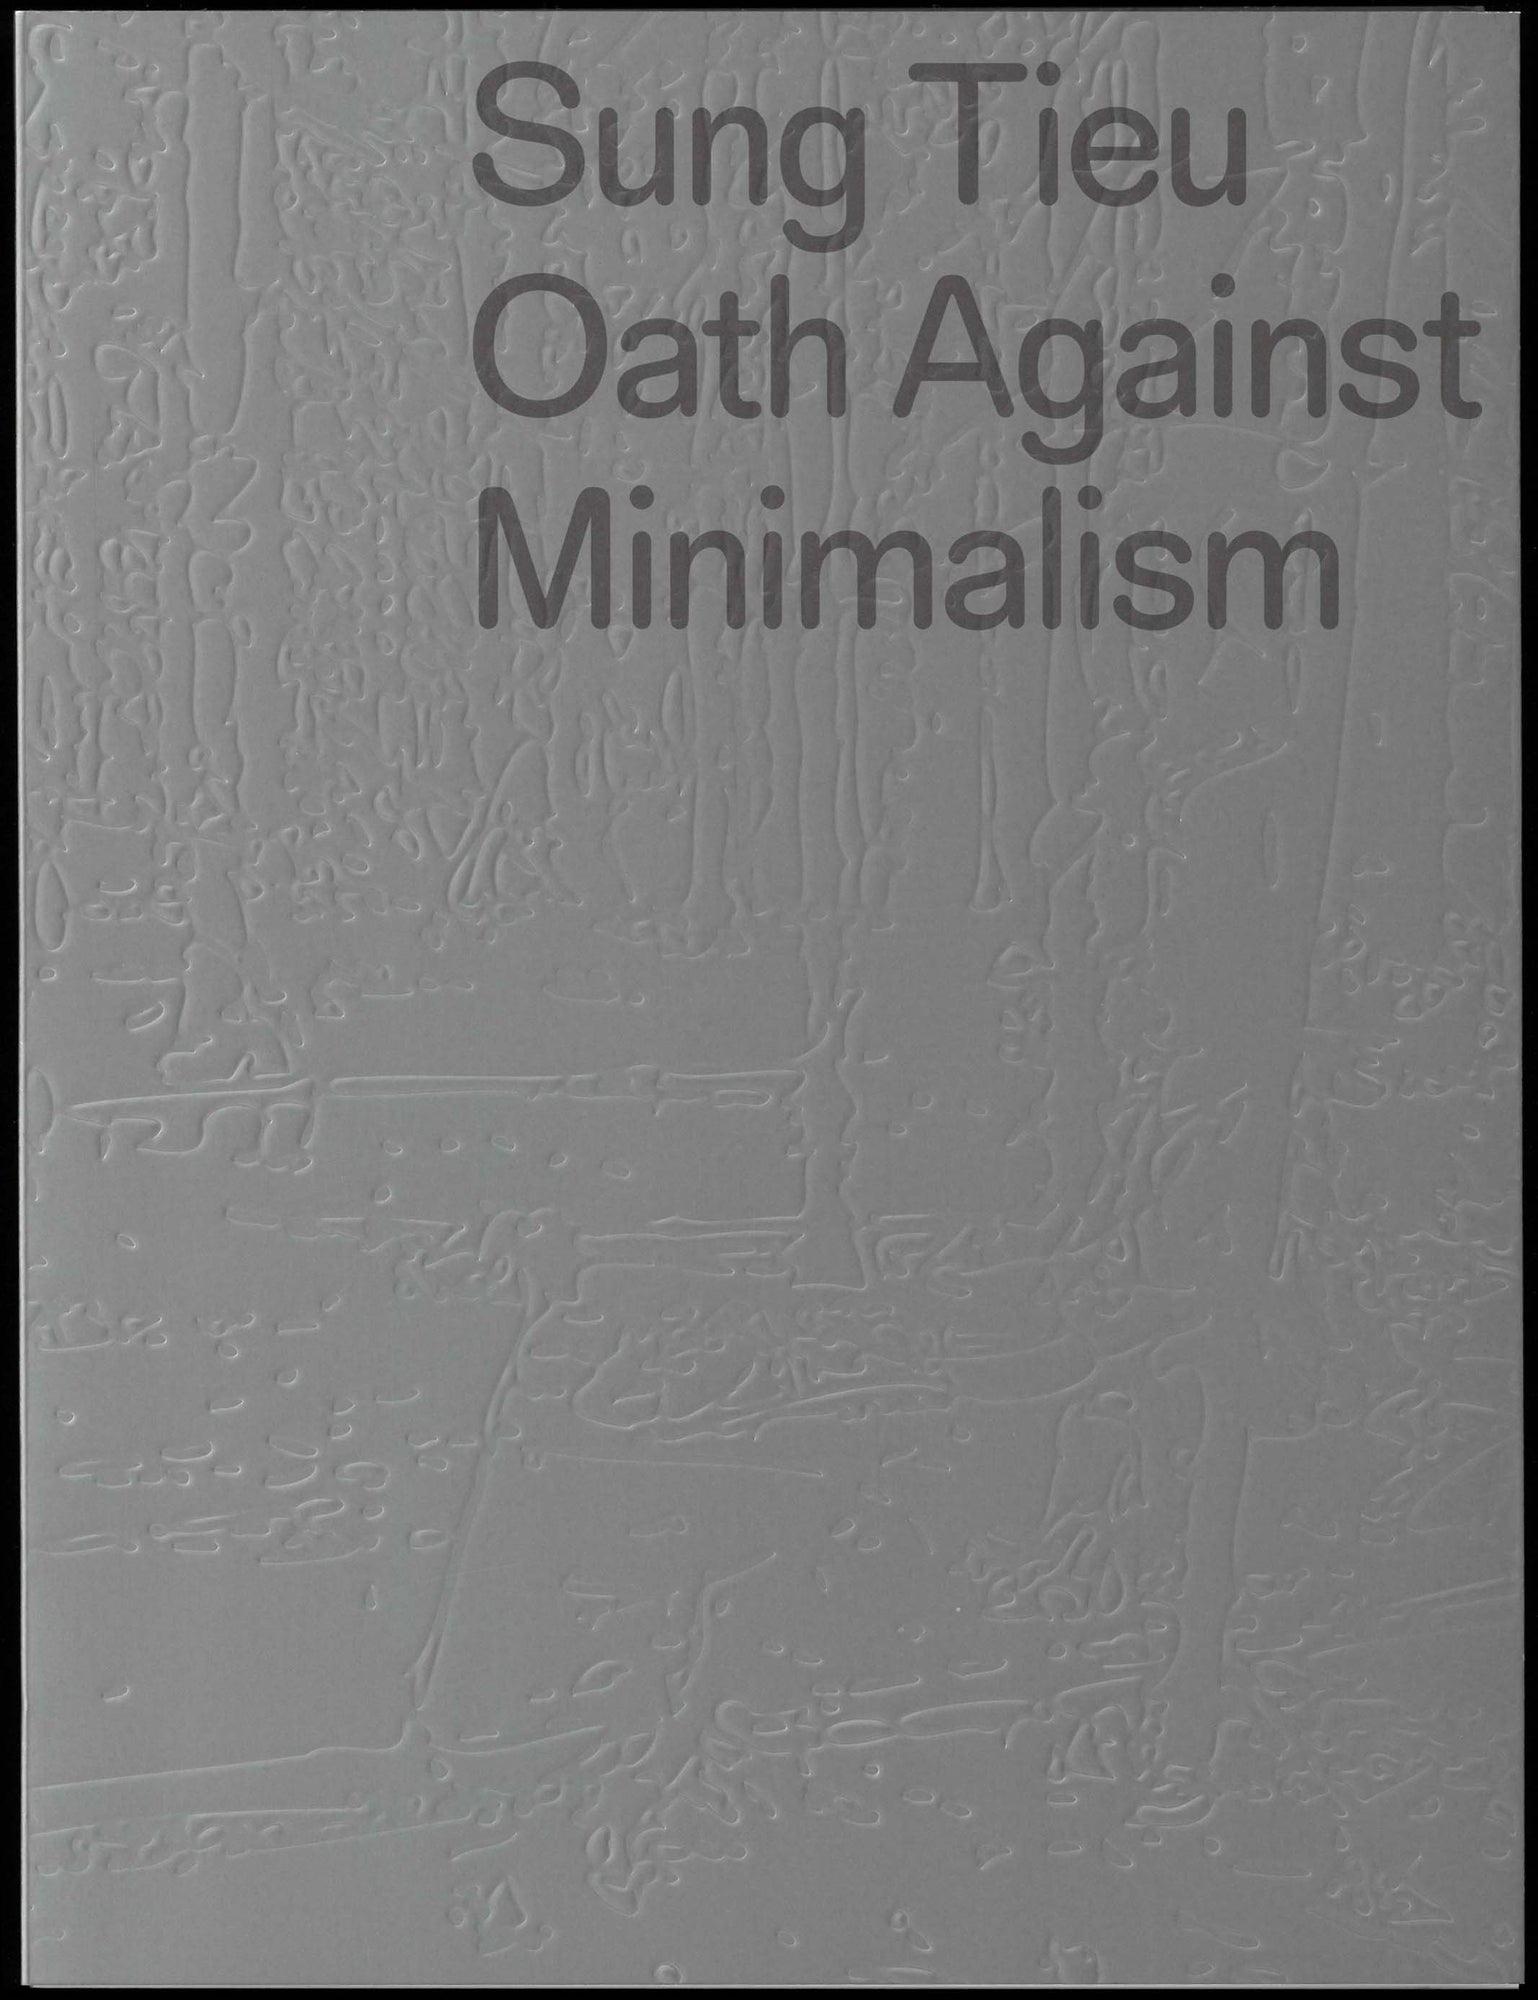 Oath Against Minimalism